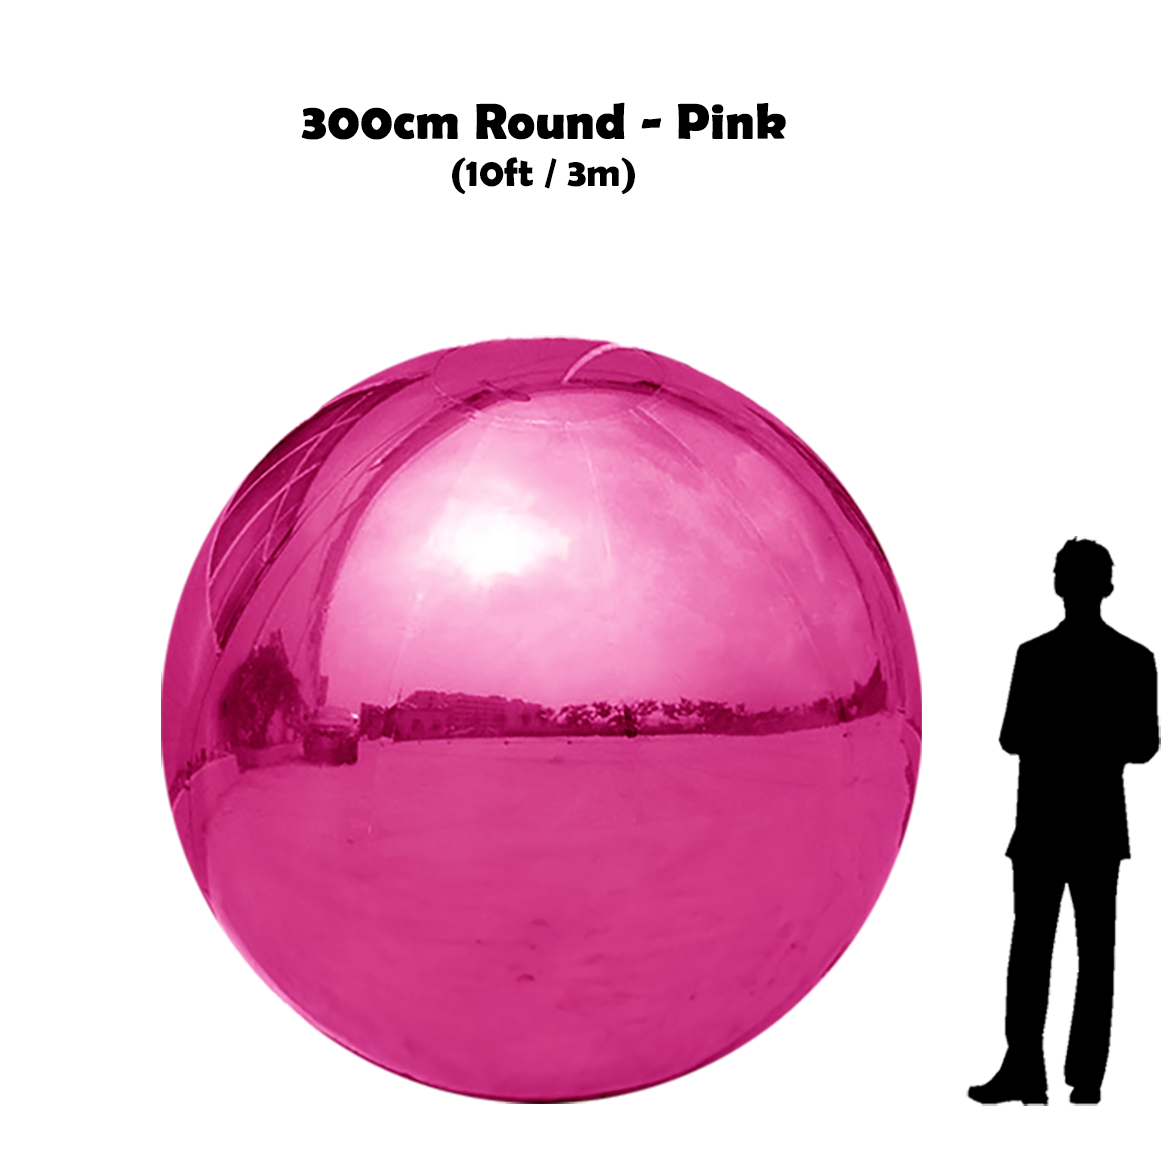 300 cm Big Pink ball beside 5'10 guy silhouette 